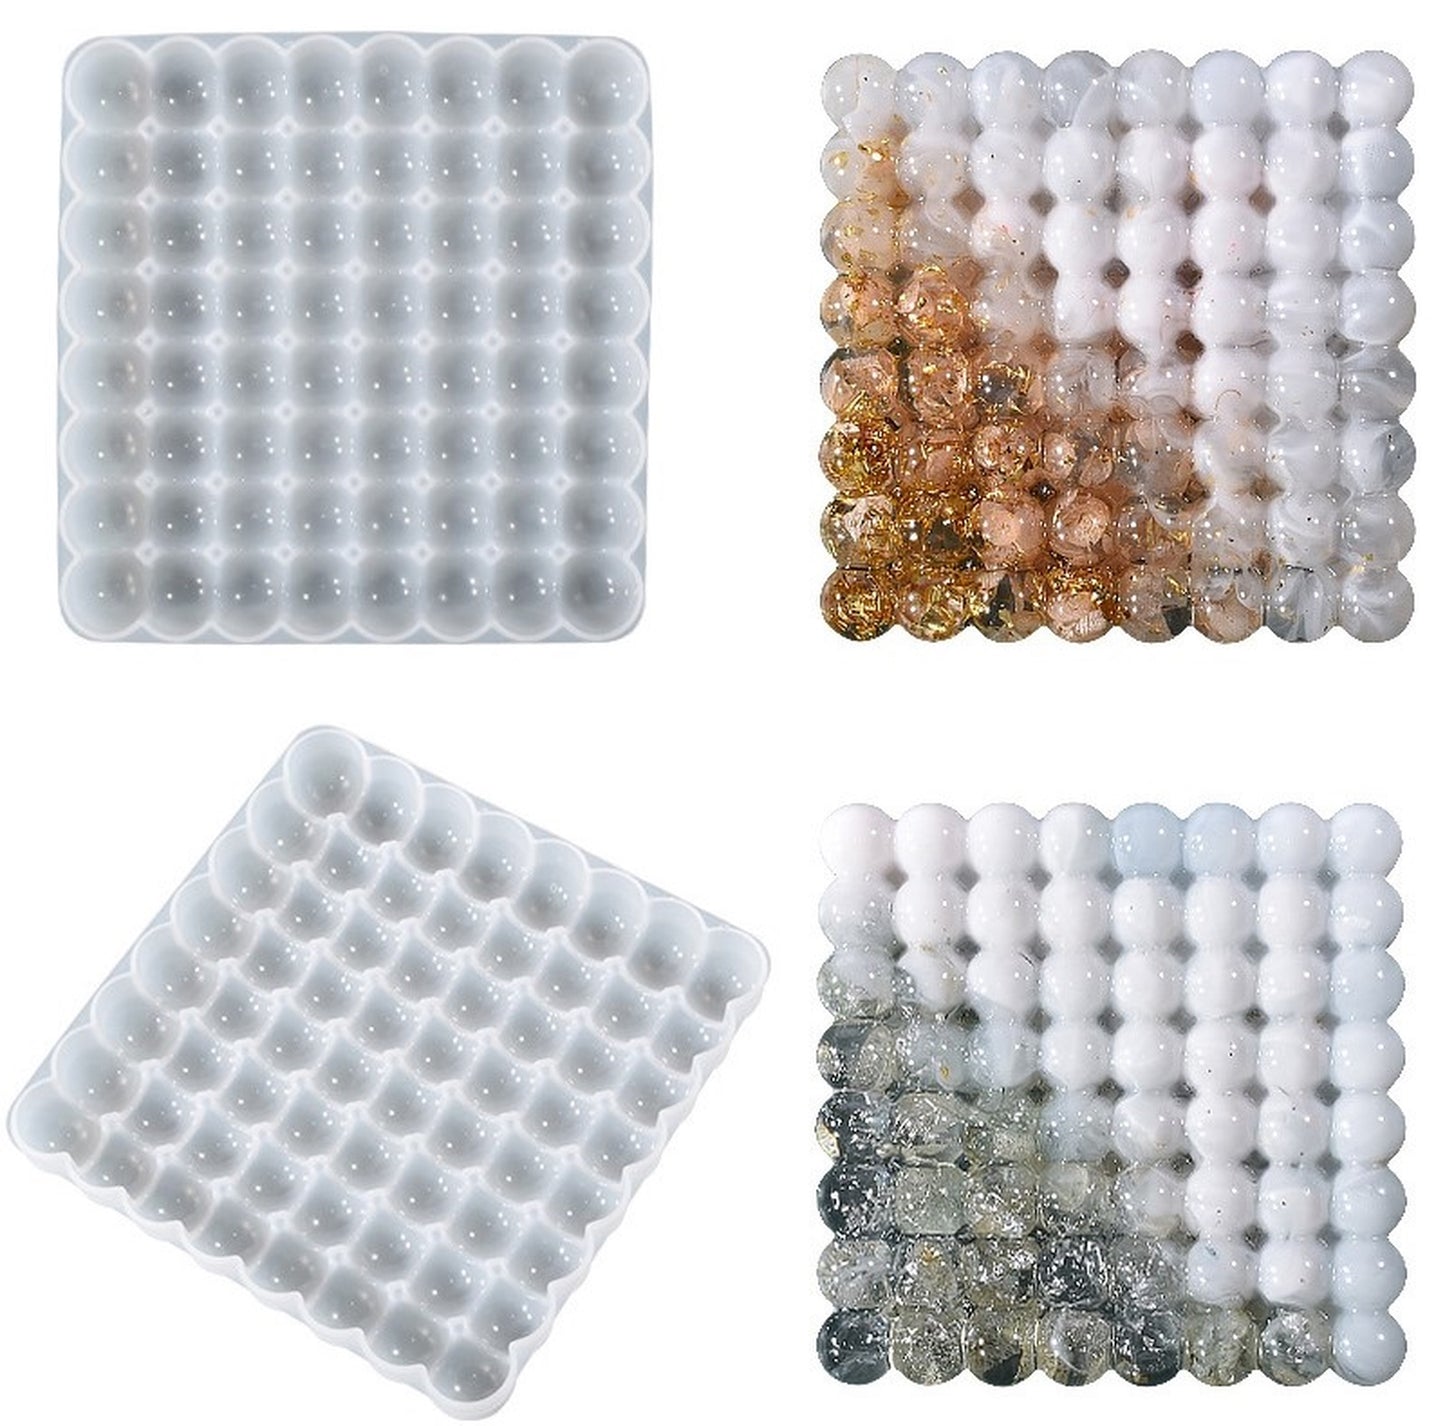 Silikonform Bubbles Rechteckige Tablett Gießform für Raysin, Resin oder Epoxidharz ca. 14 cm